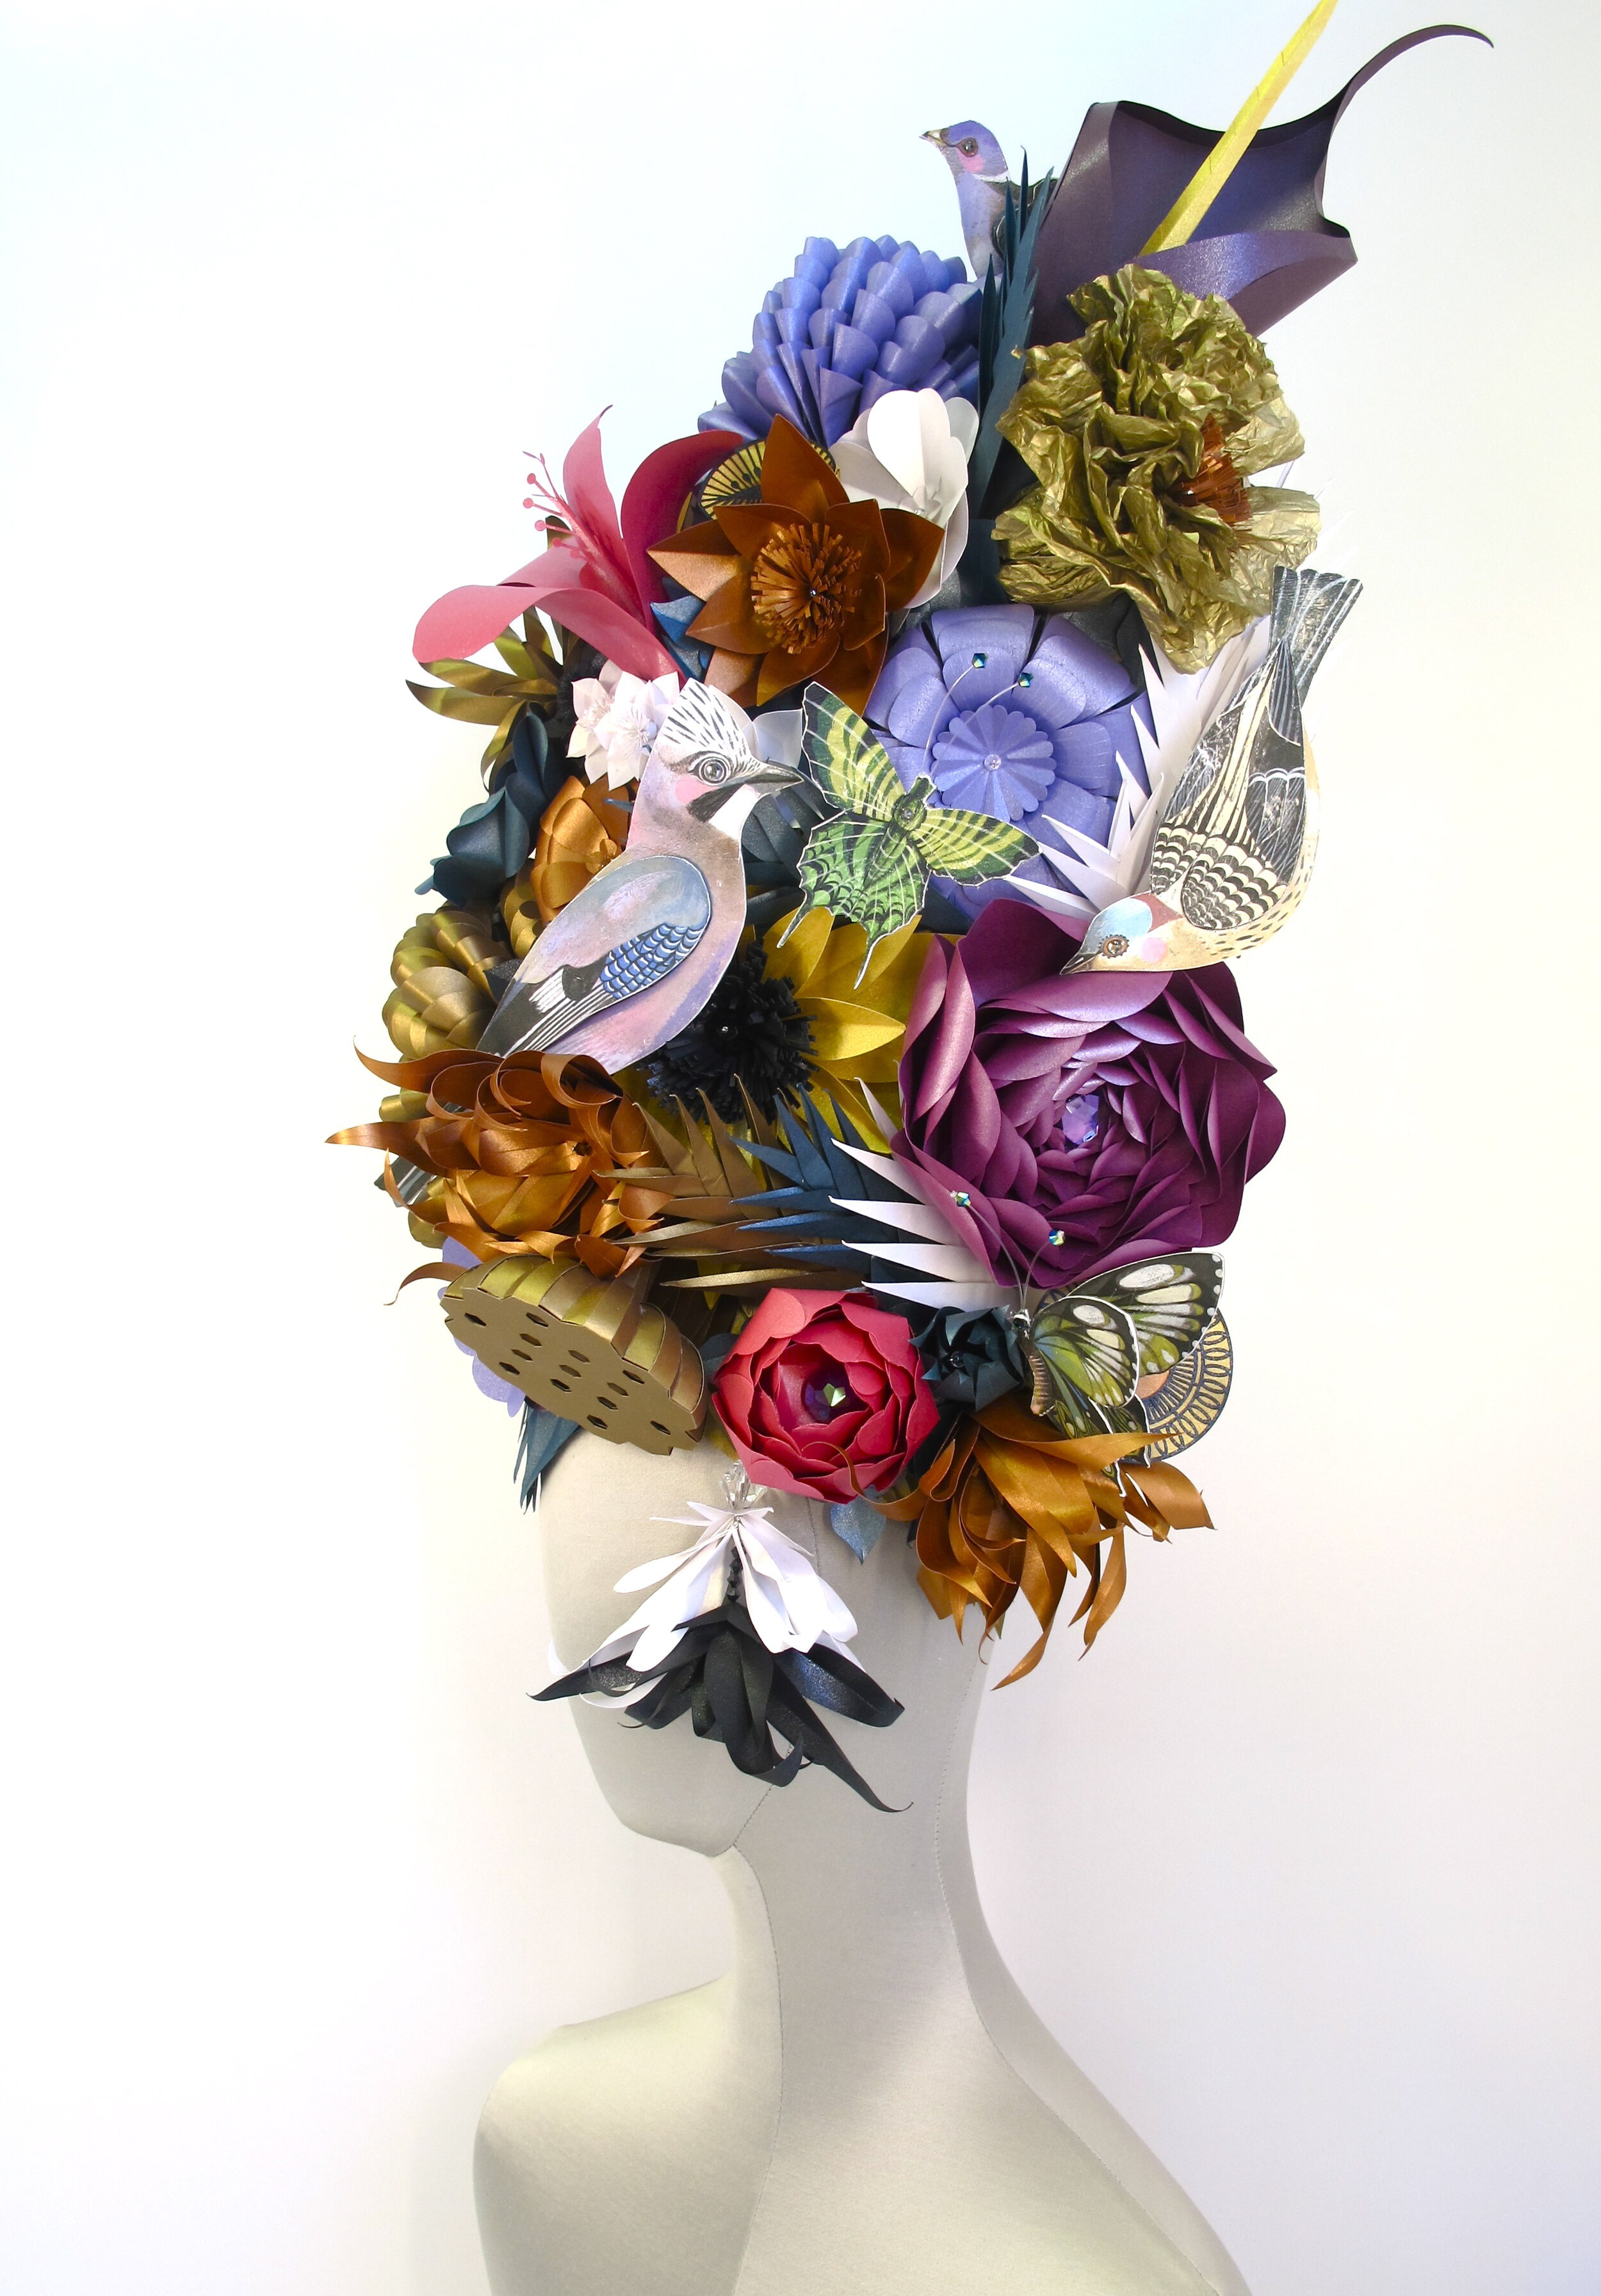 mont-blanc-zoe-bradley-design-paper-headpiece-art-design-paper-flowers.jpg